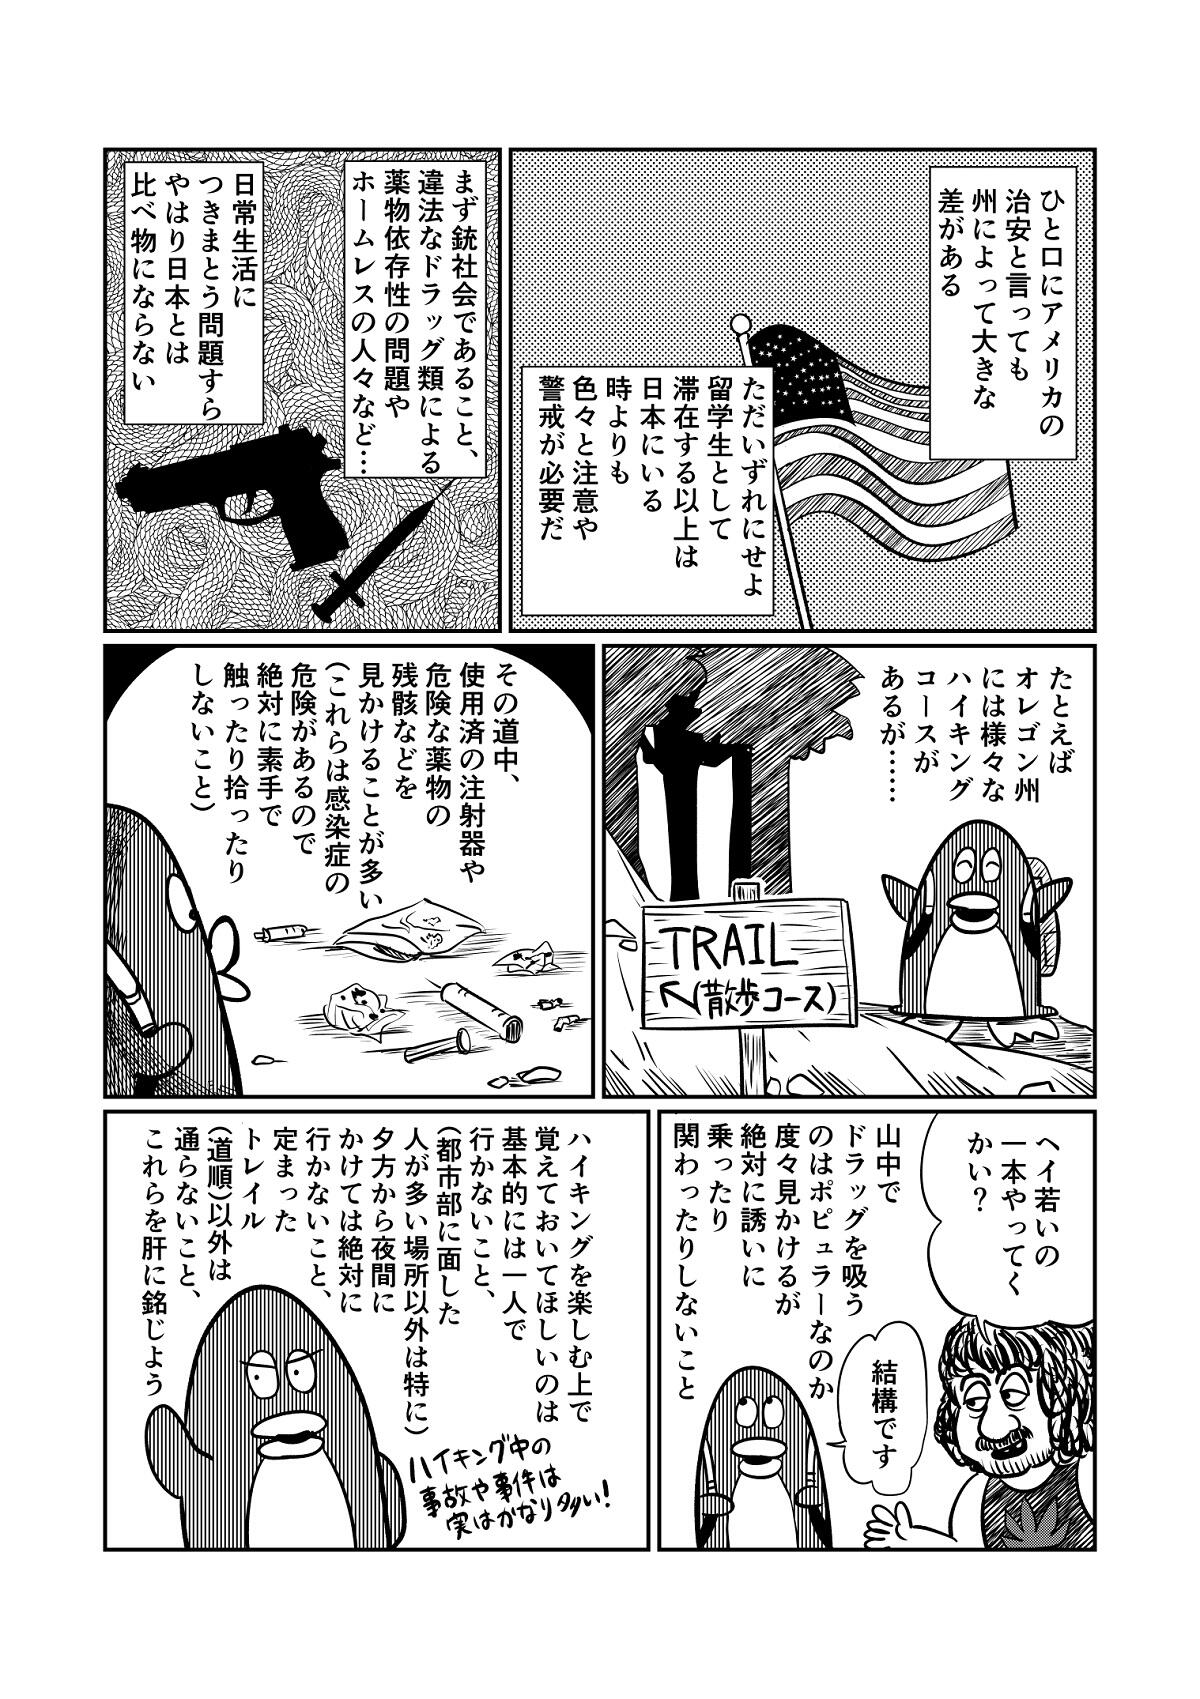 https://www.ryugaku.co.jp/column/images/jawamura13_3_1200.jpg